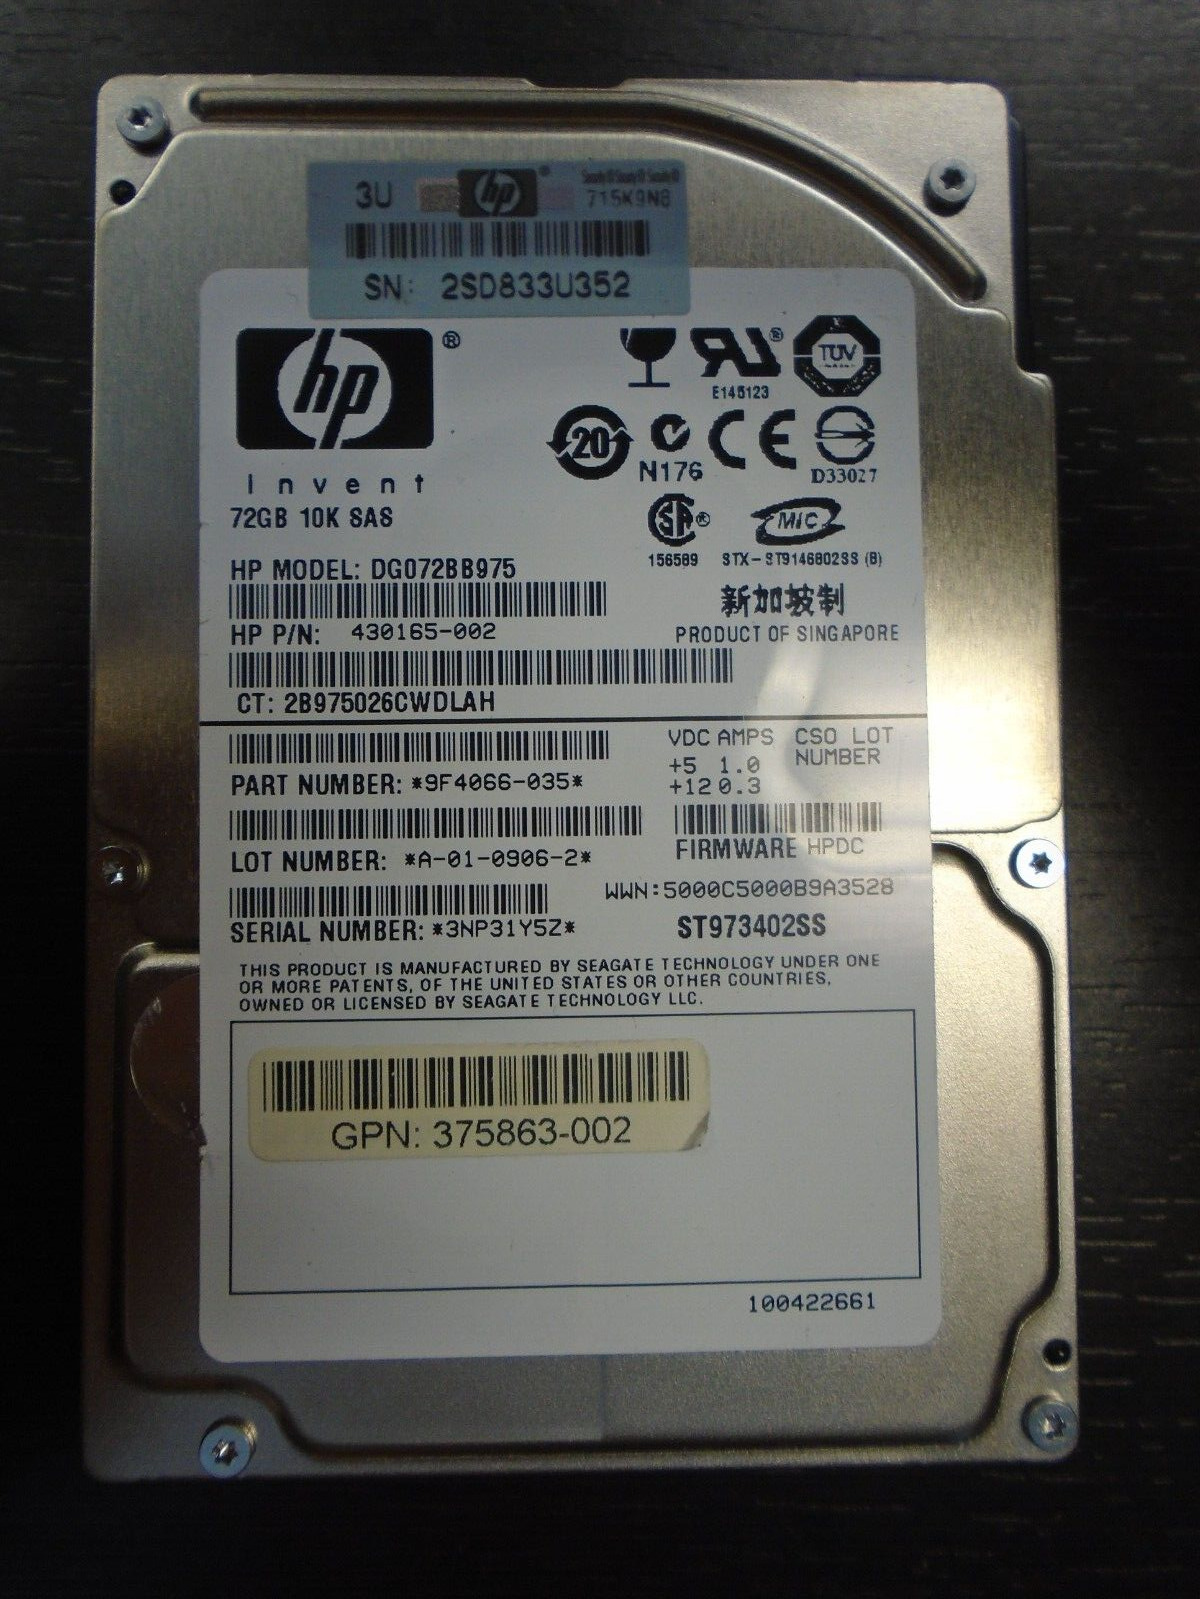 HP Invent 72GB 10K SAS HP; MODEL DG072BB975 Used Server Hard drives.